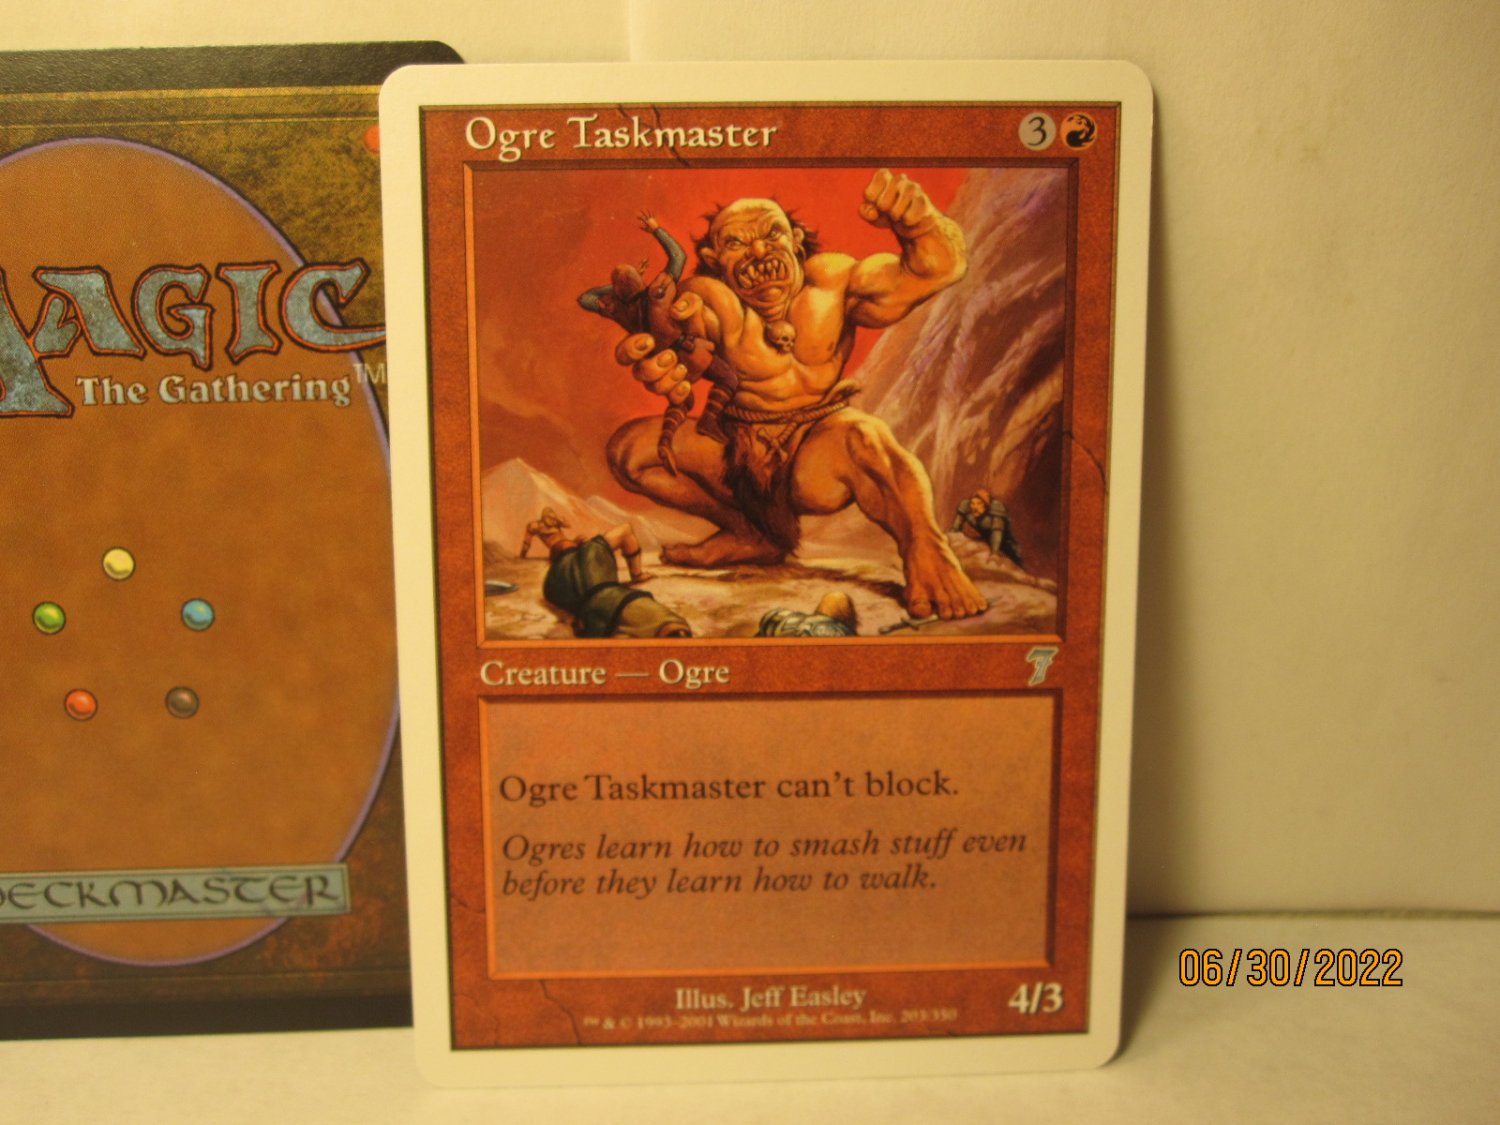 2001 Magic the Gathering MTG card #203/350: Ogre Taskmaster